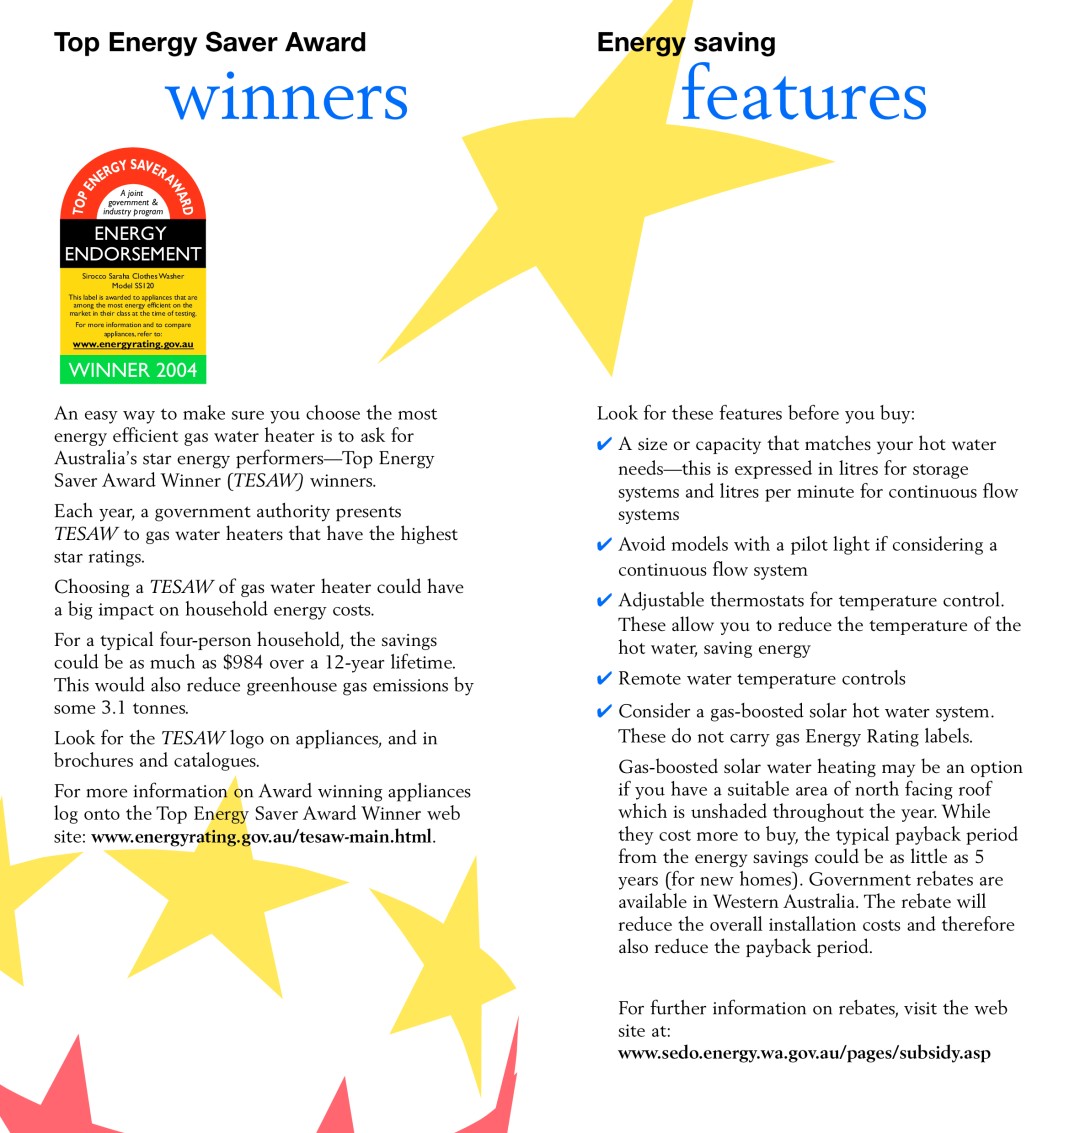 Energy Tech Laboratories SS120 brochure winners, features, Top Energy Saver Award, Energy saving, Endorsement, Winner 